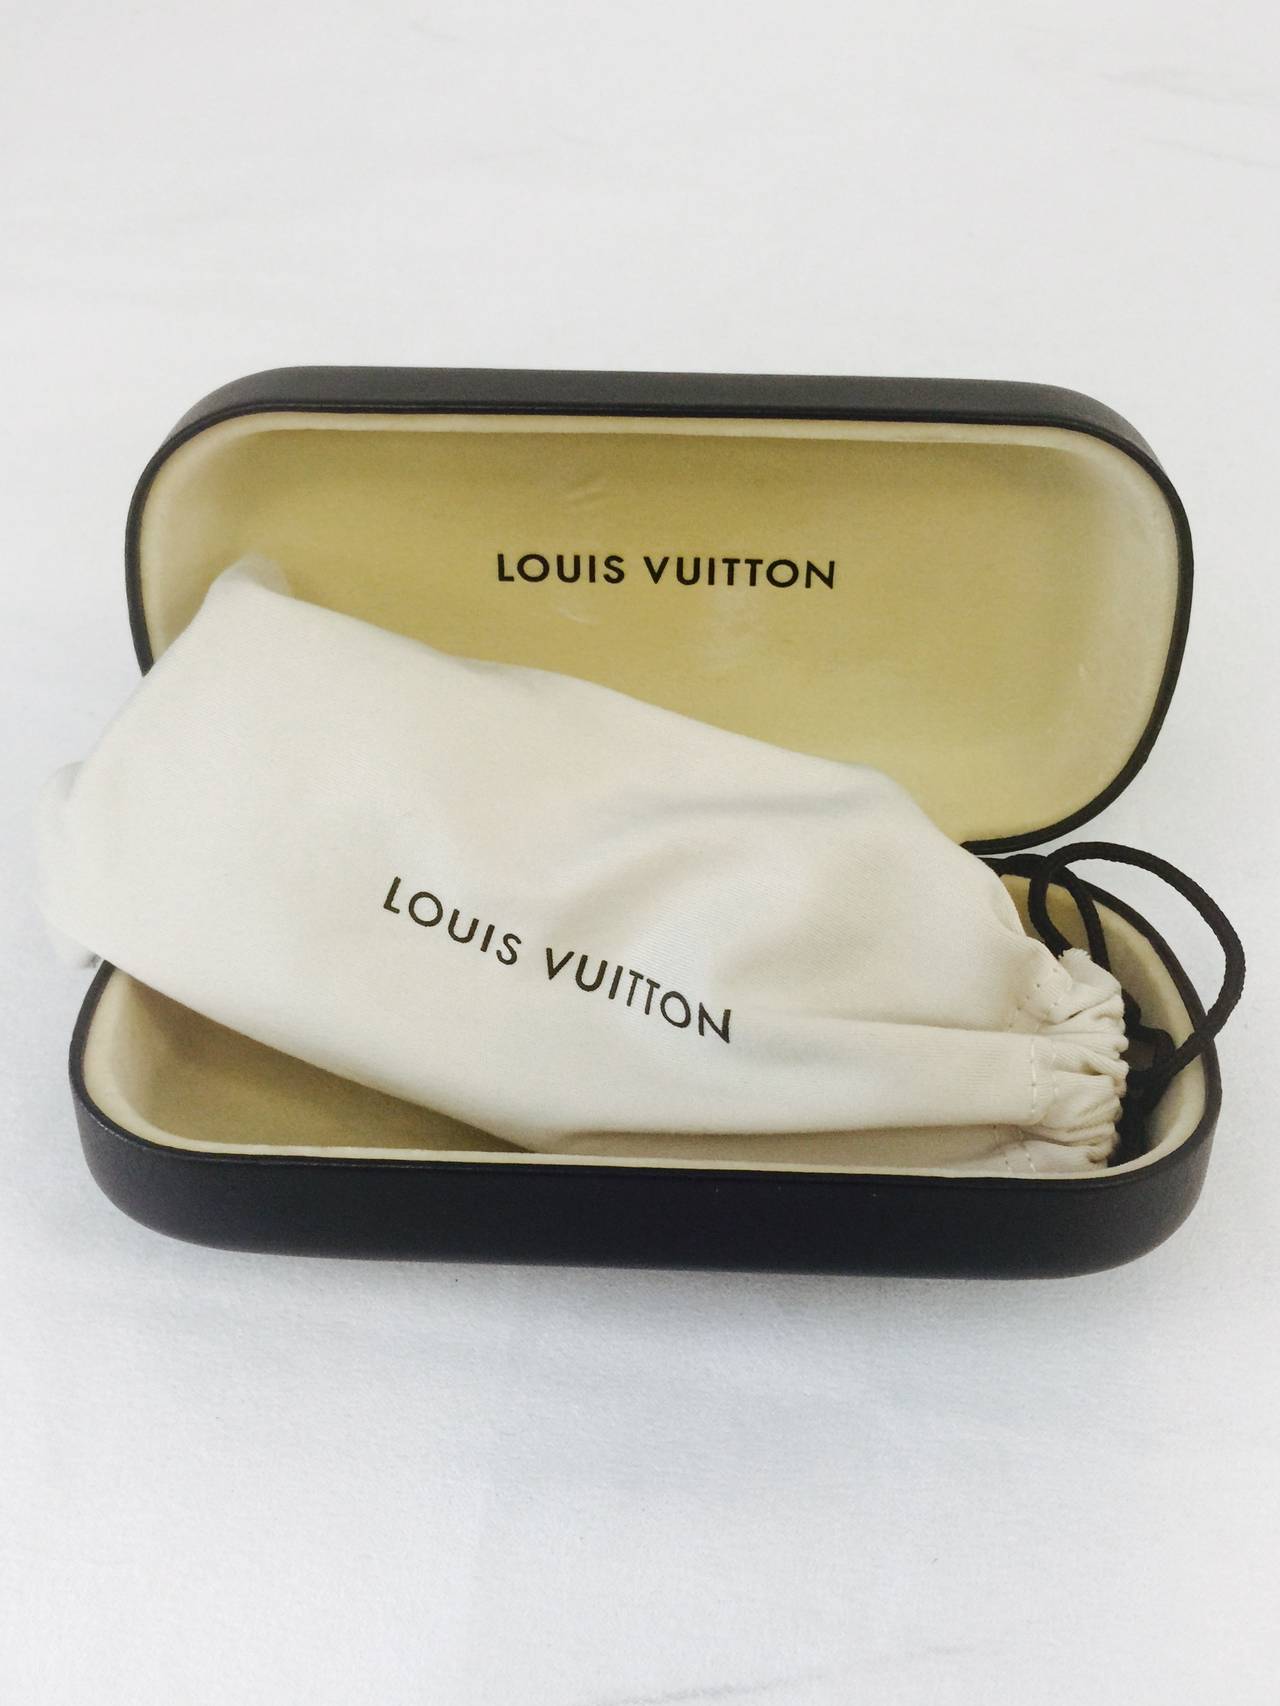 New Hand Made Louis Vuitton Suspicion Sunglasses at 1stdibs